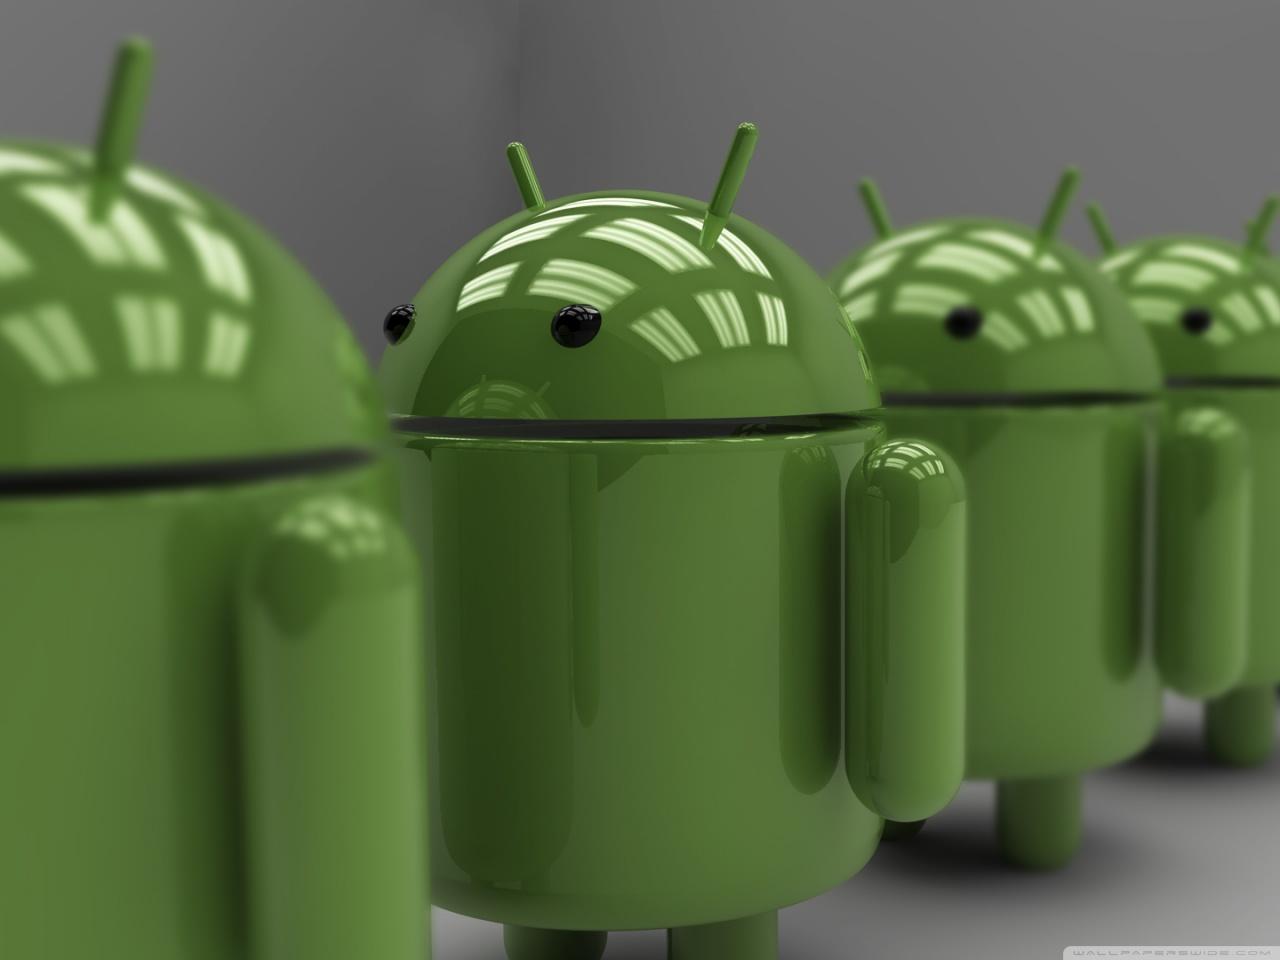 Купить старый андроид. Android. Фото на рабочий стол андроид Россия. Аватарки на группу в виде РОБАКСОВ. Android 3d.